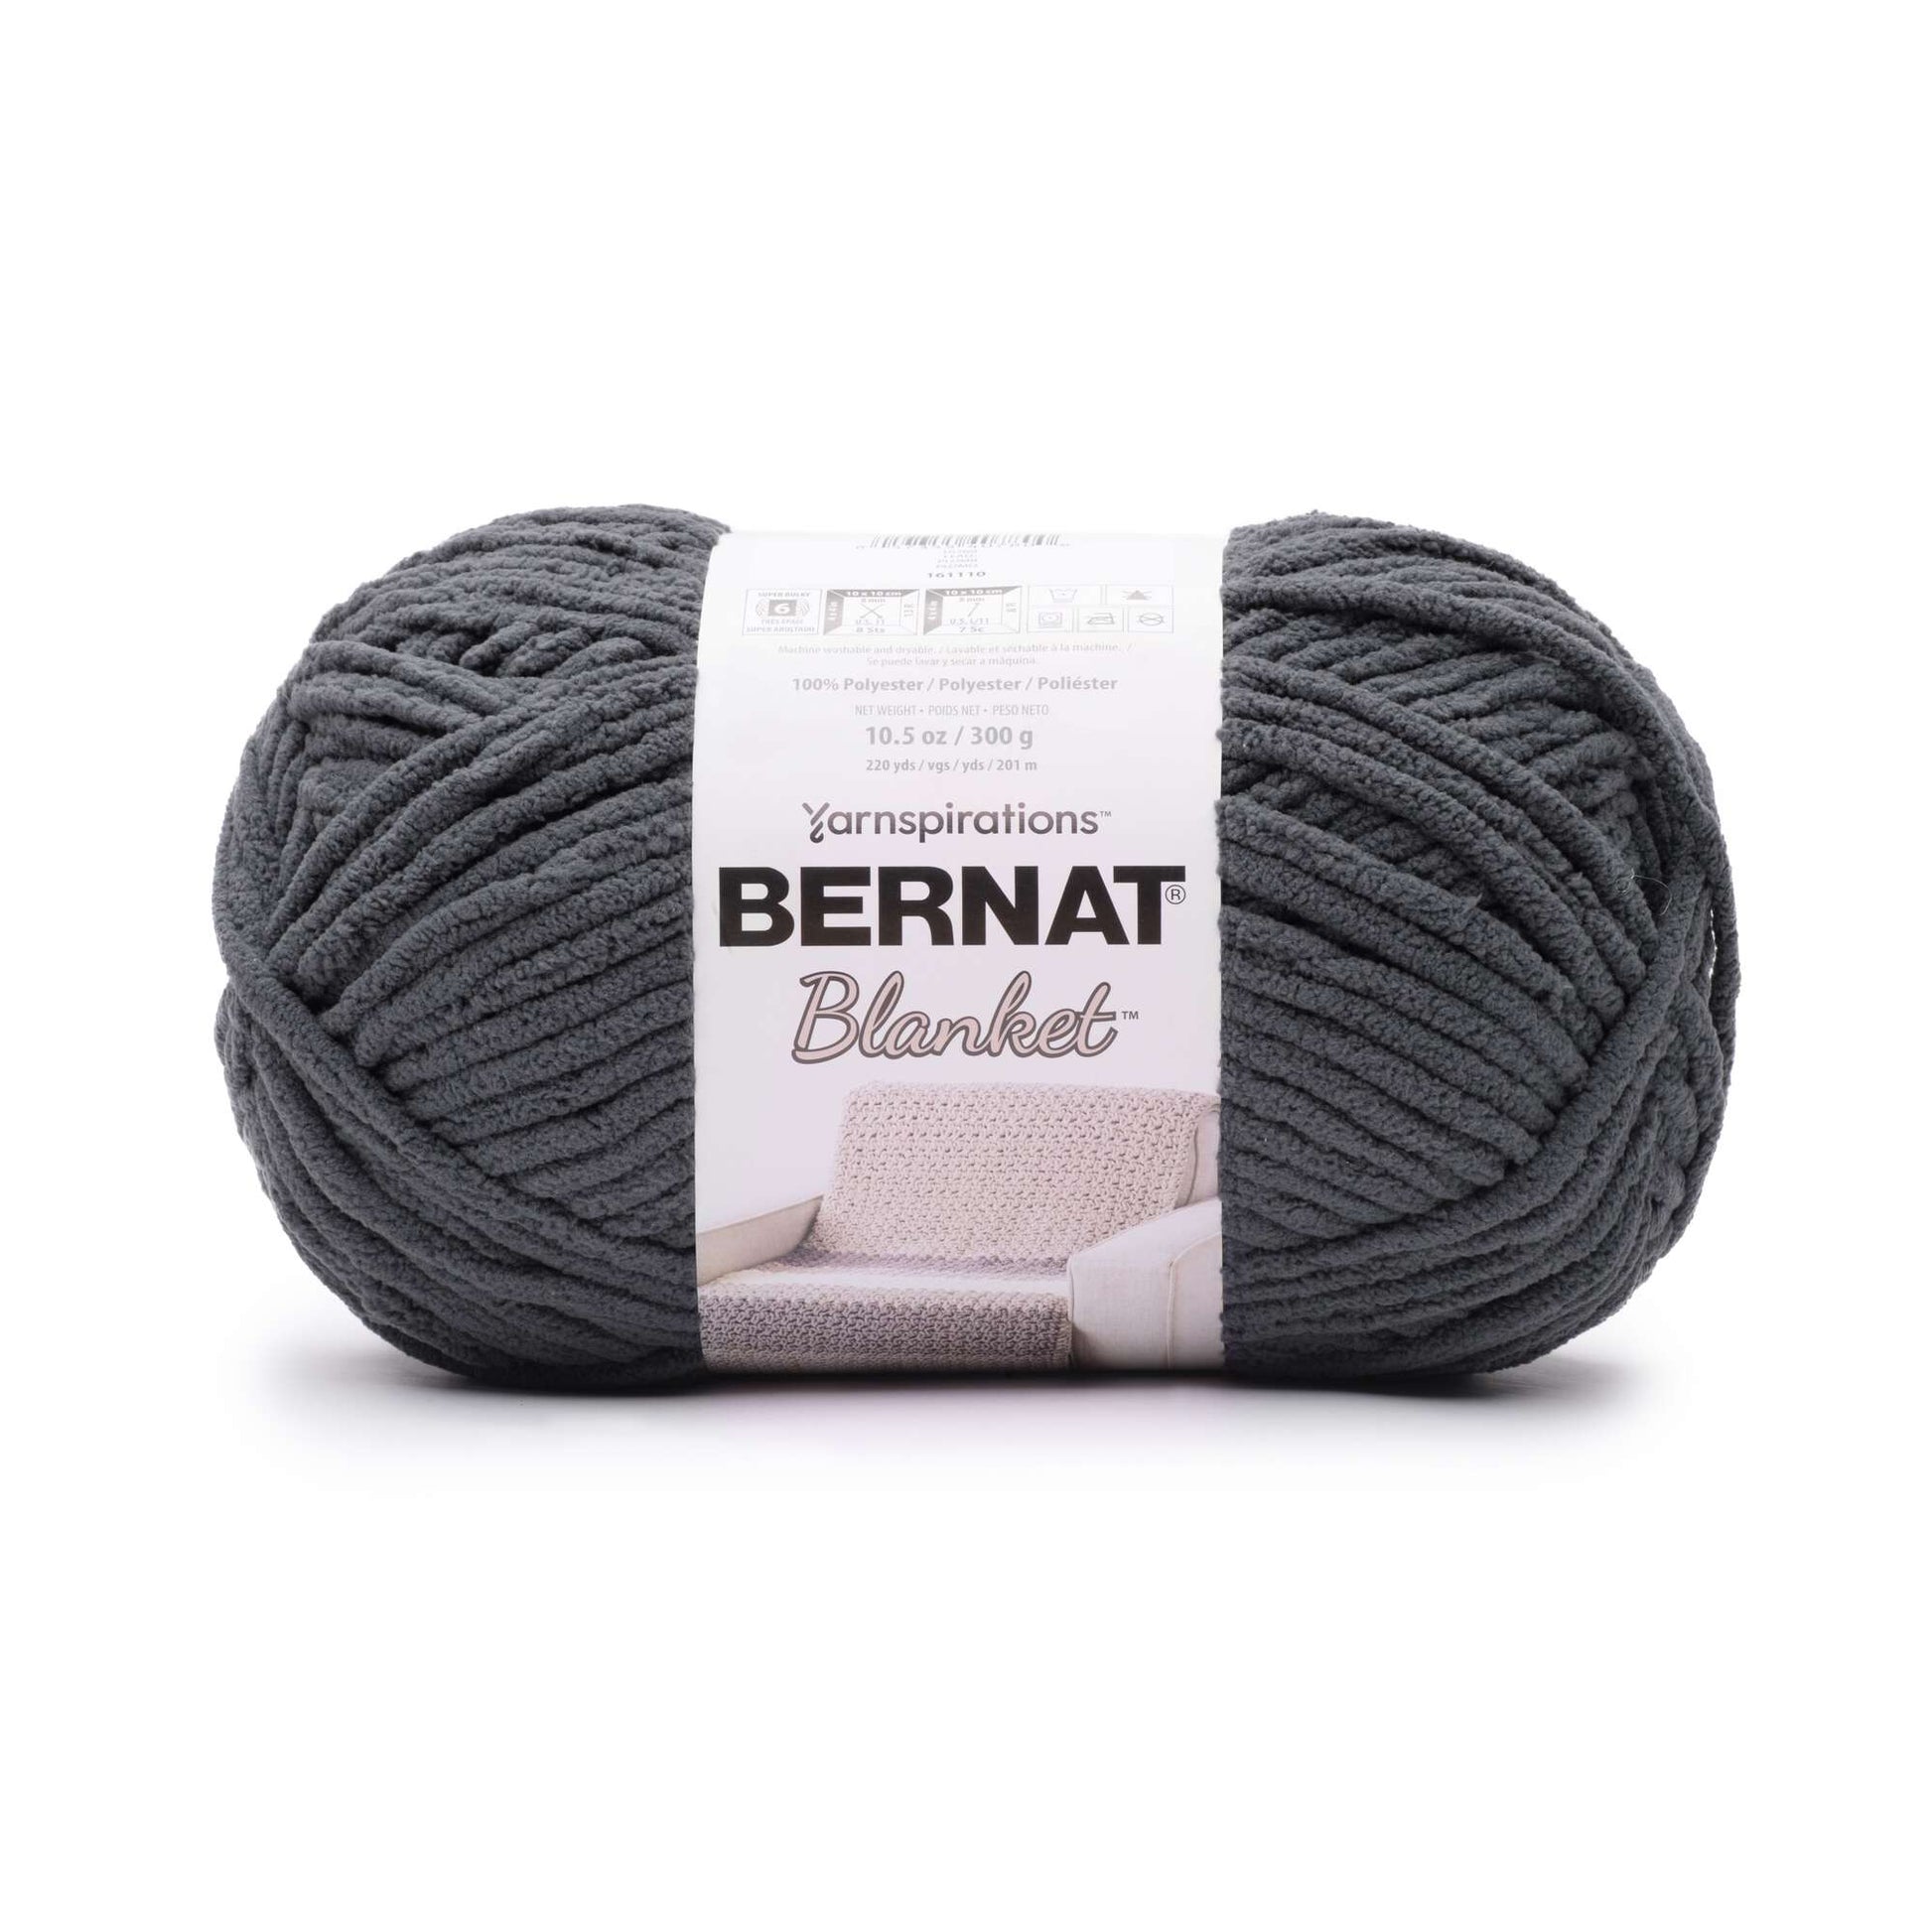 Bernat Blanket Yarn (300g/10.5oz) | Yarnspirations